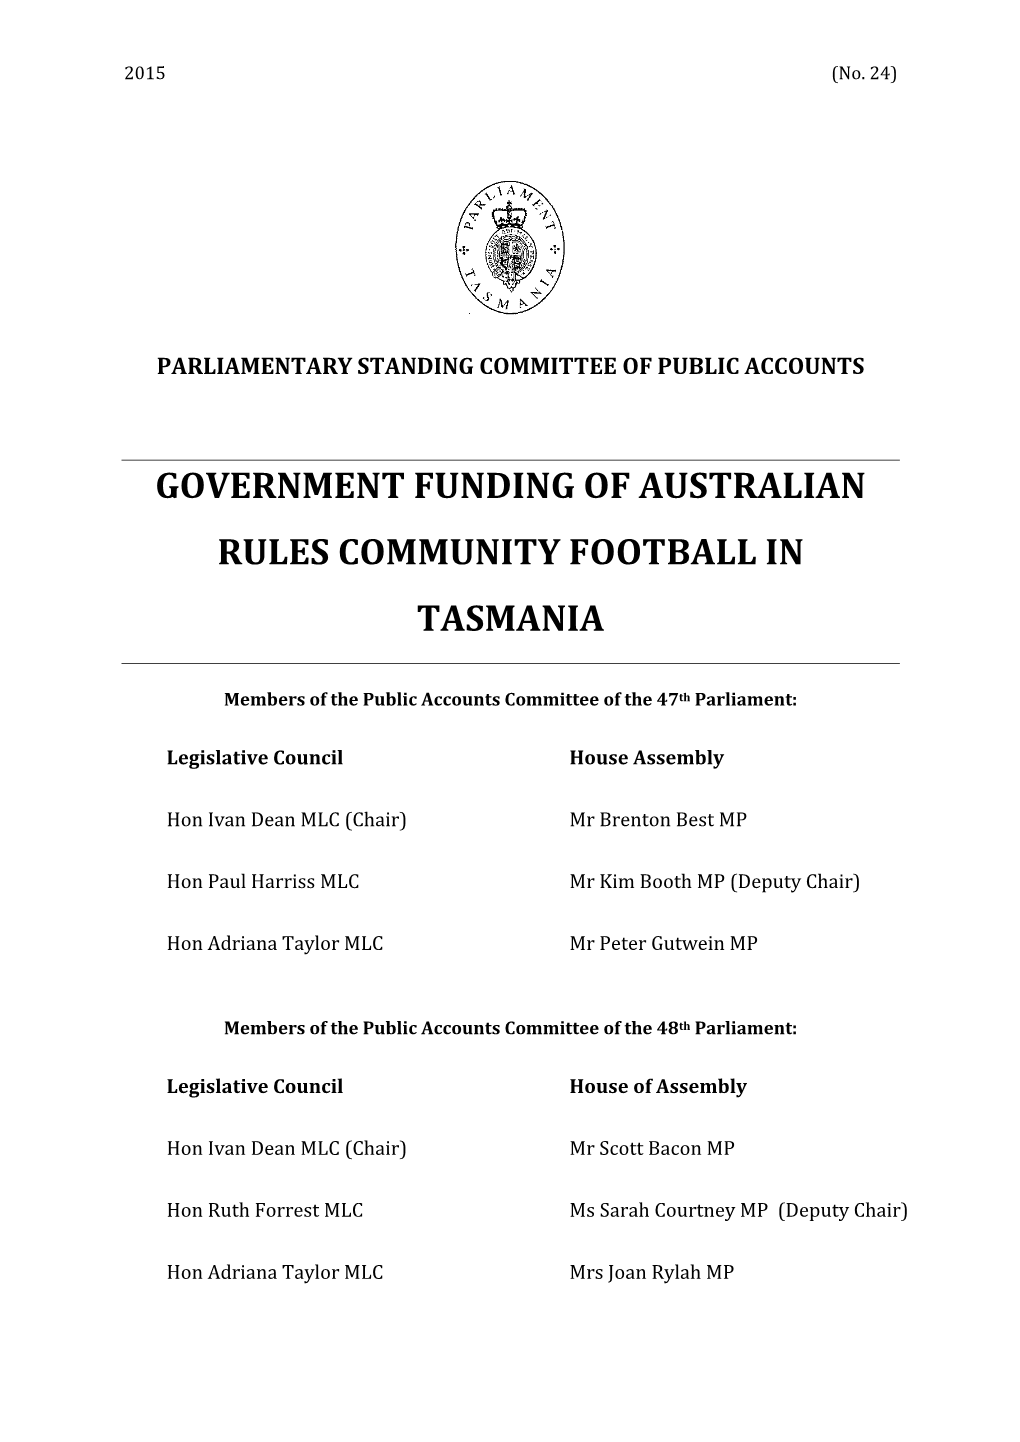 Government Funding of Australian Rules Community Football in Tasmania